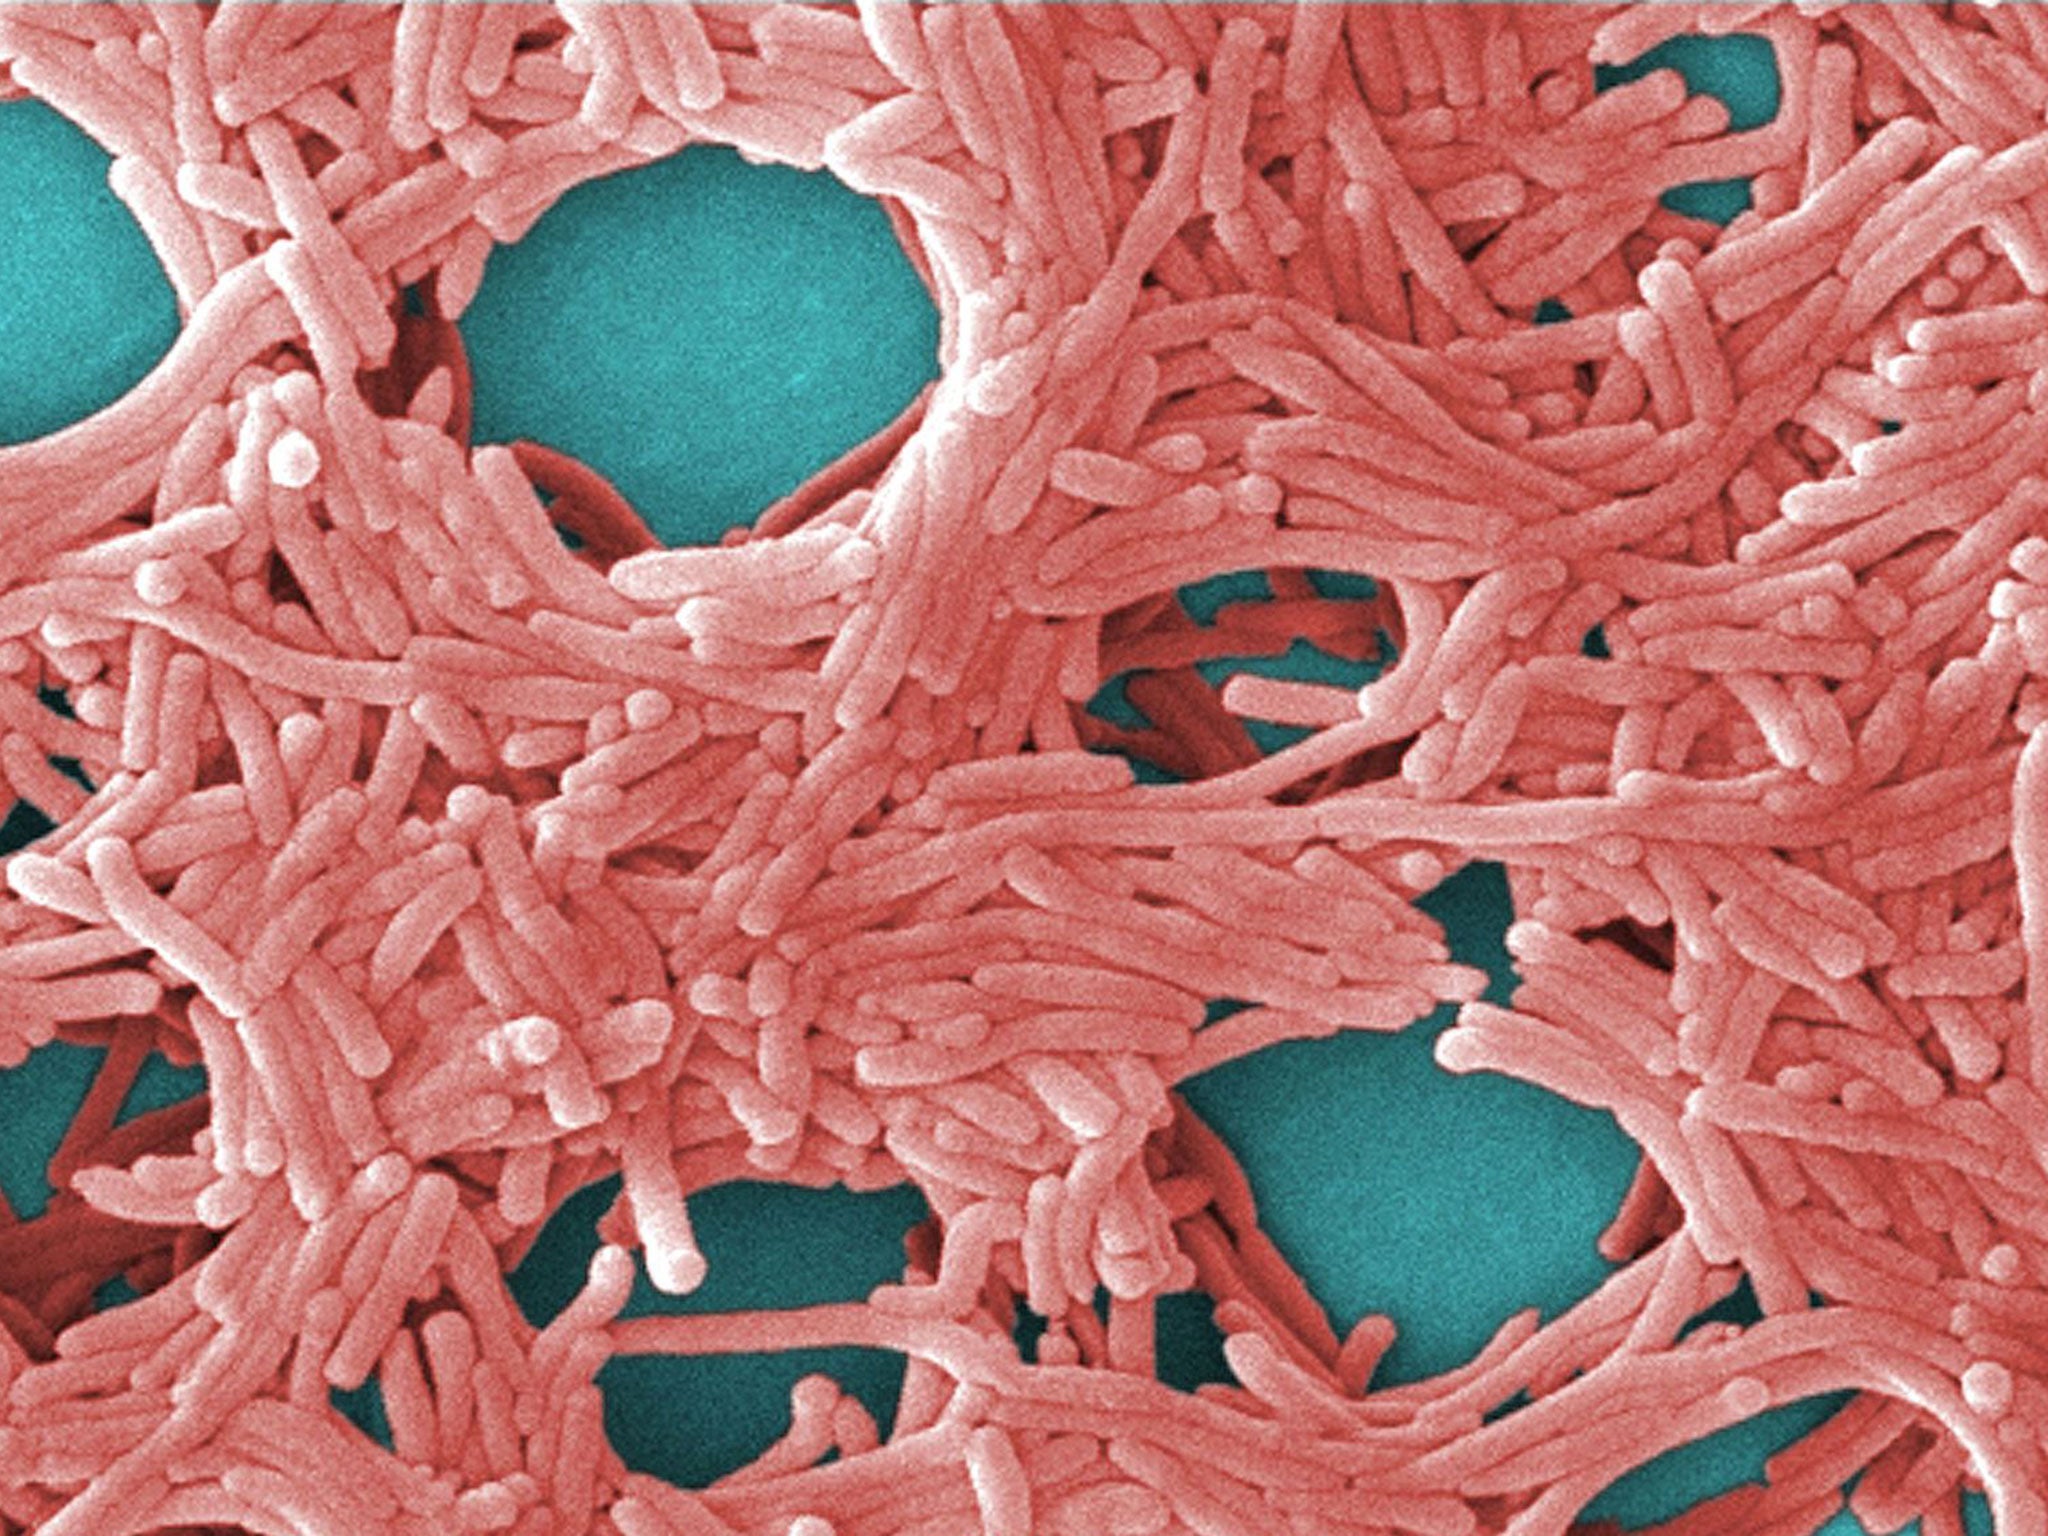 Legionella bacteria was responsible for the outbreak